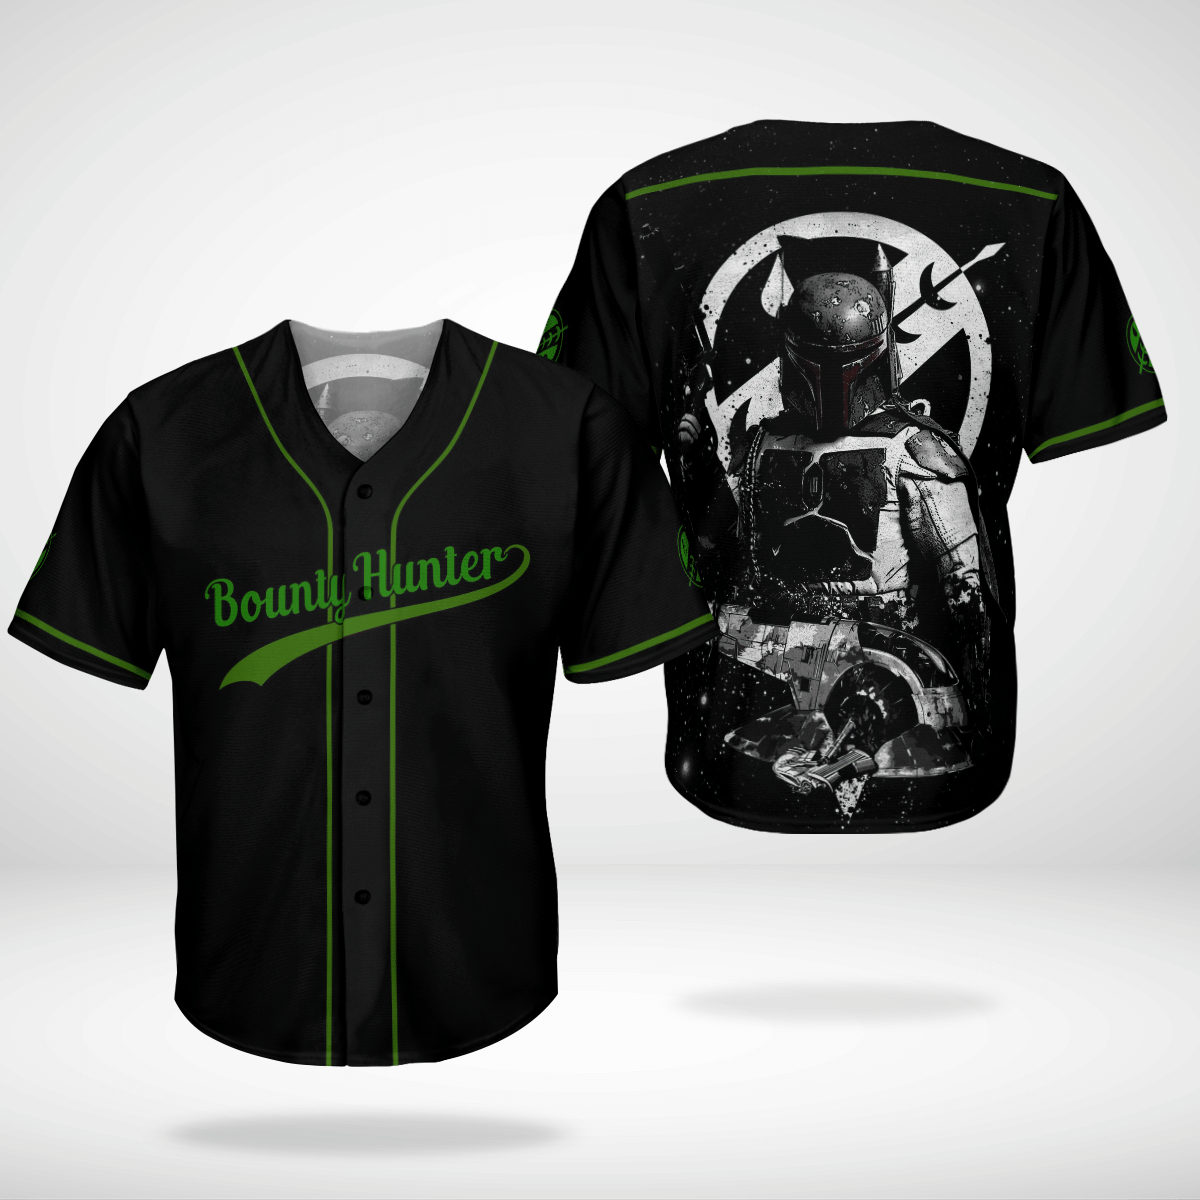 Bounty hunter baseball shirt – LIMITED EDITION